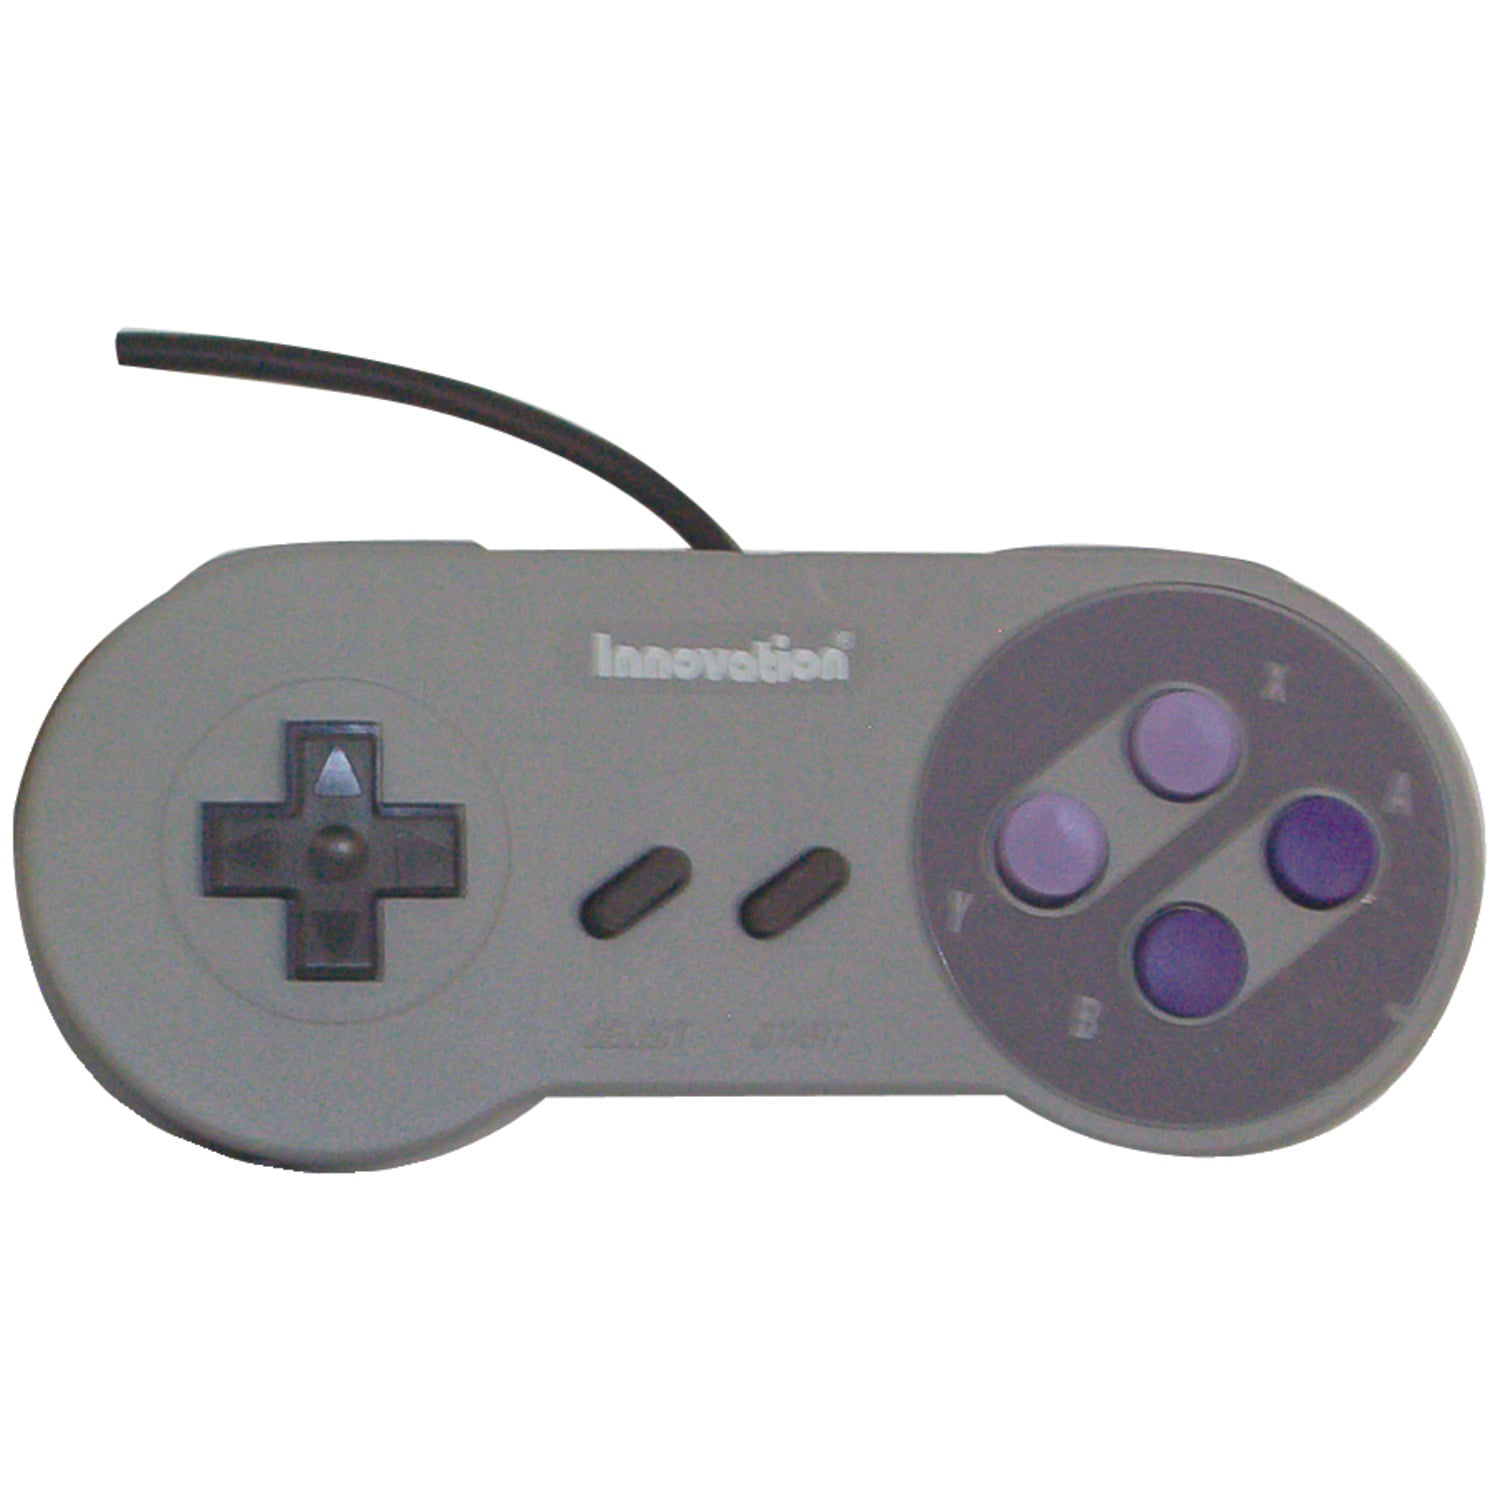 Super Nintendo Entertainment System Controller - Hardware - Site